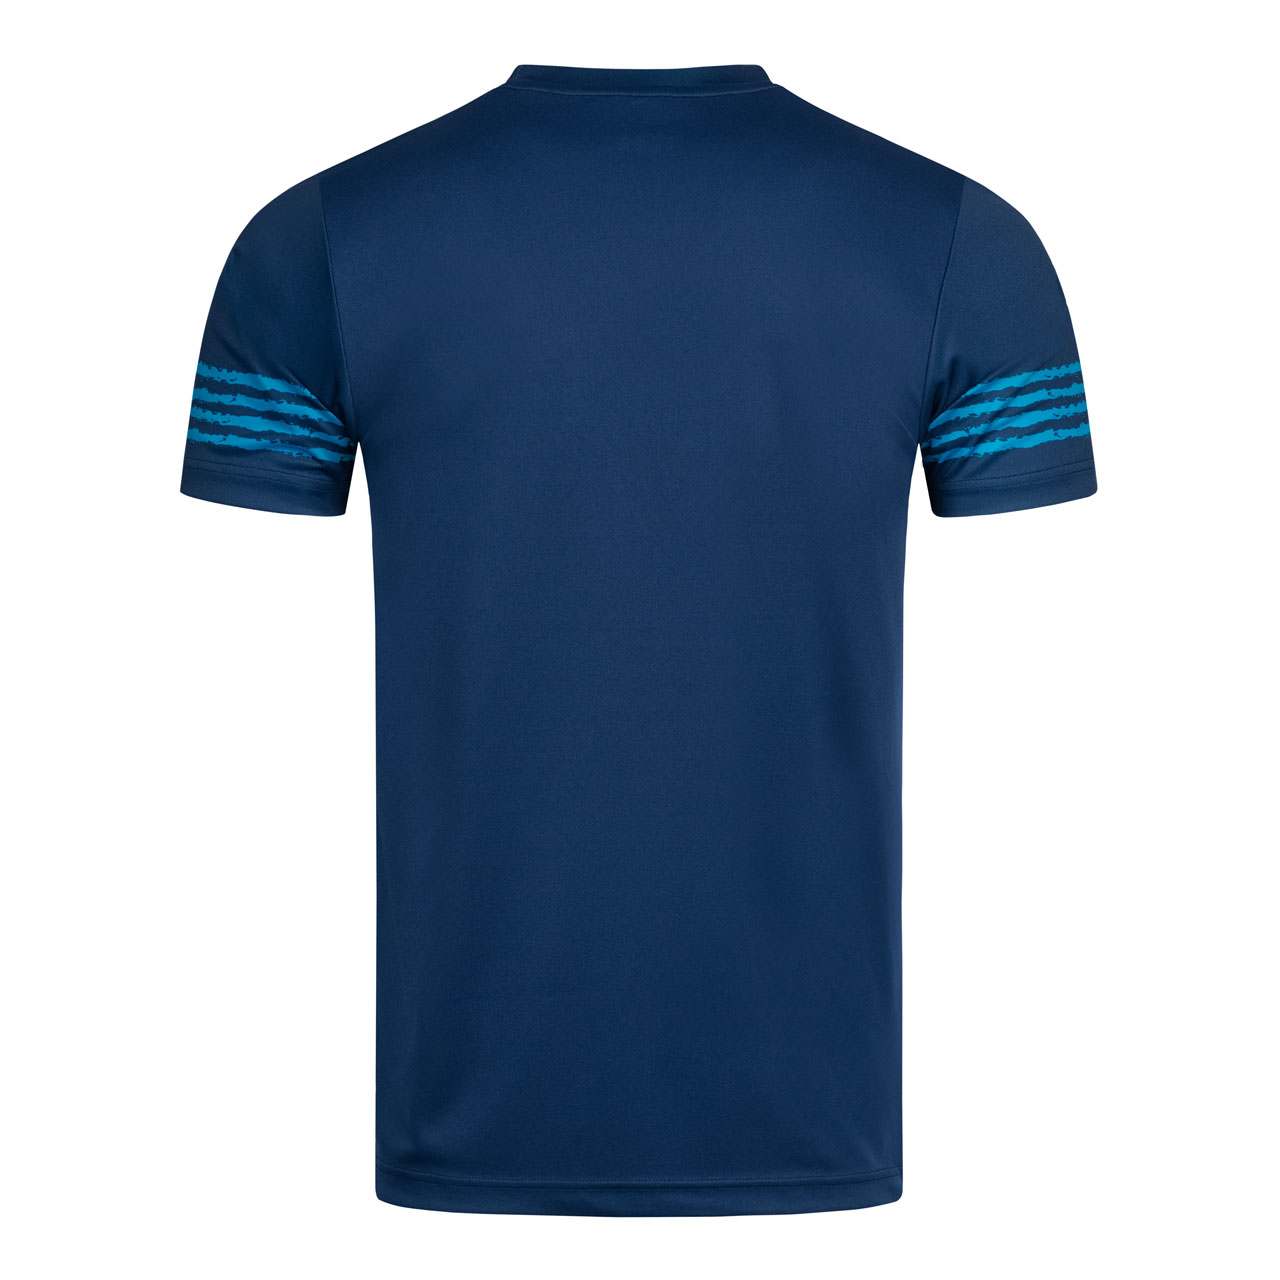 DONIC Tischtennis Poloshirt Libra marine/cyanblau Rücken